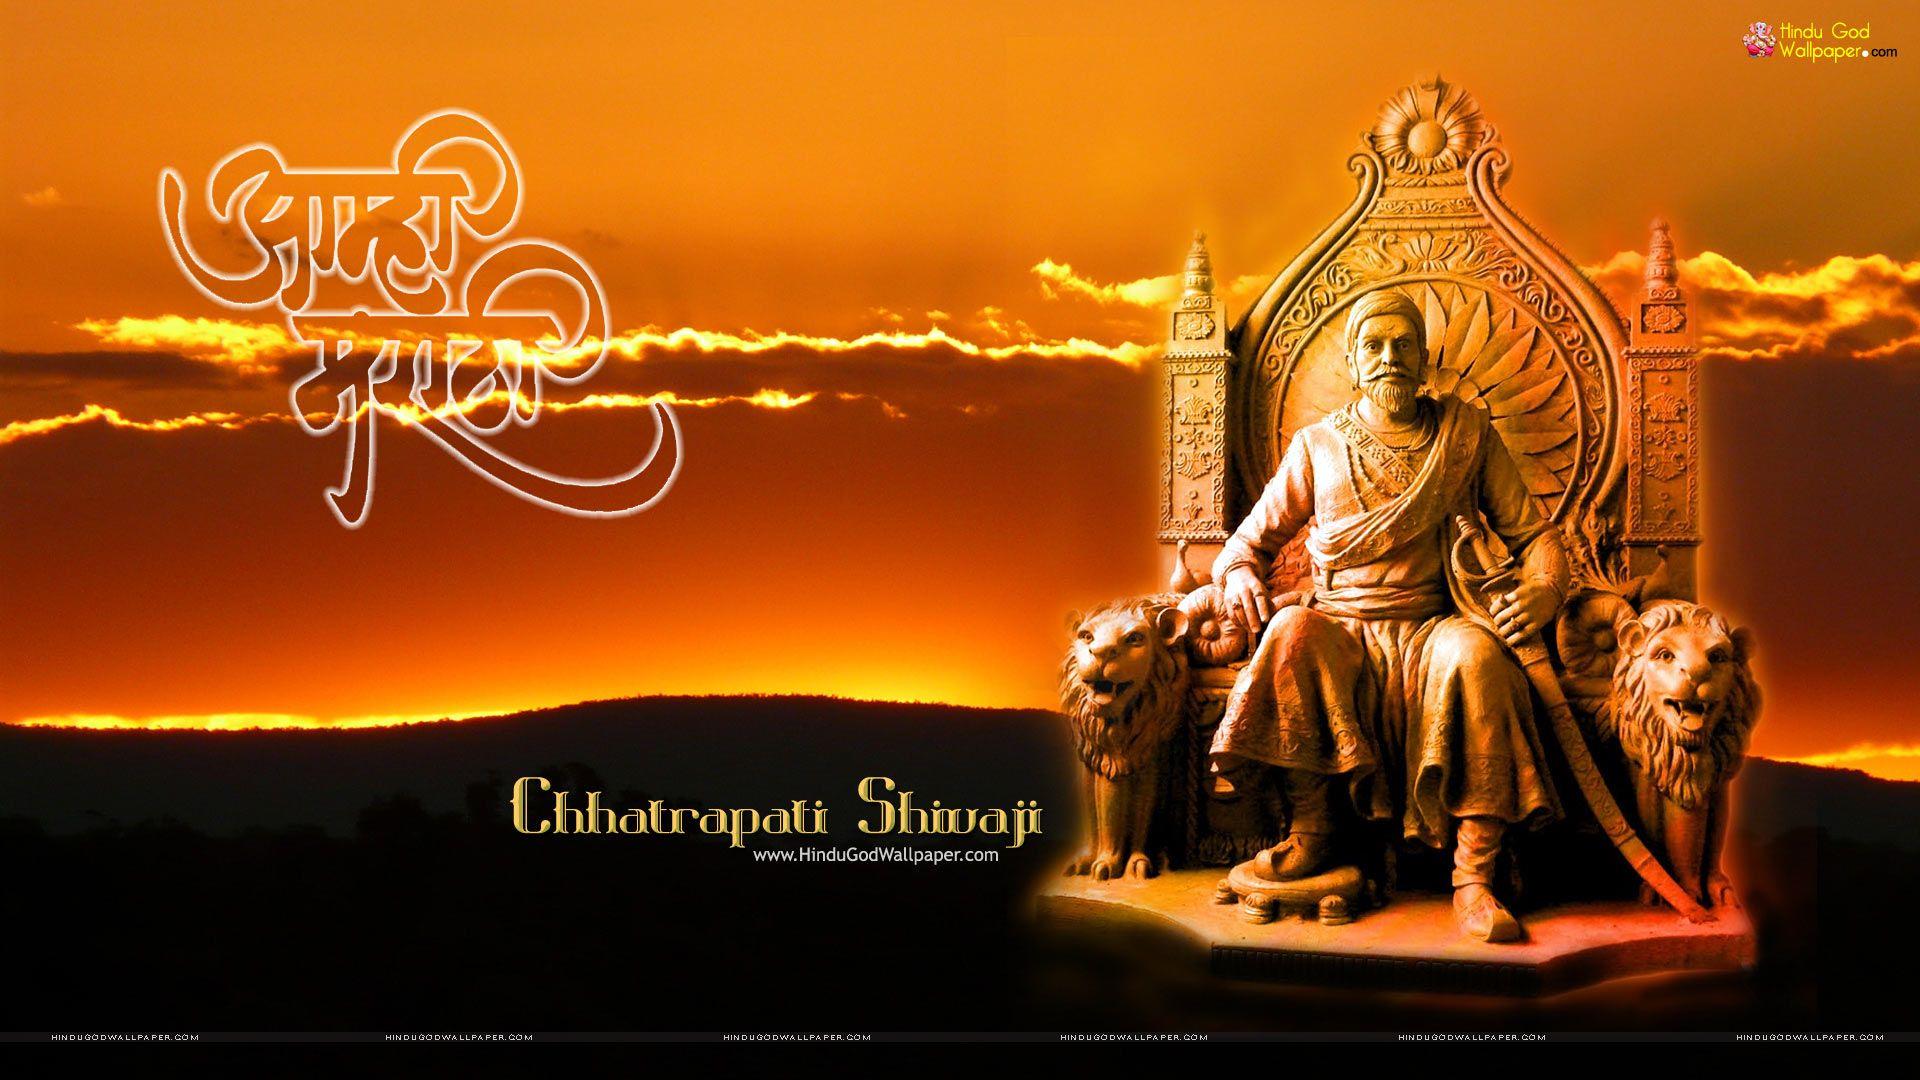 Chatrapati Shivaji Maharaj Wallpaper Free Downloadp